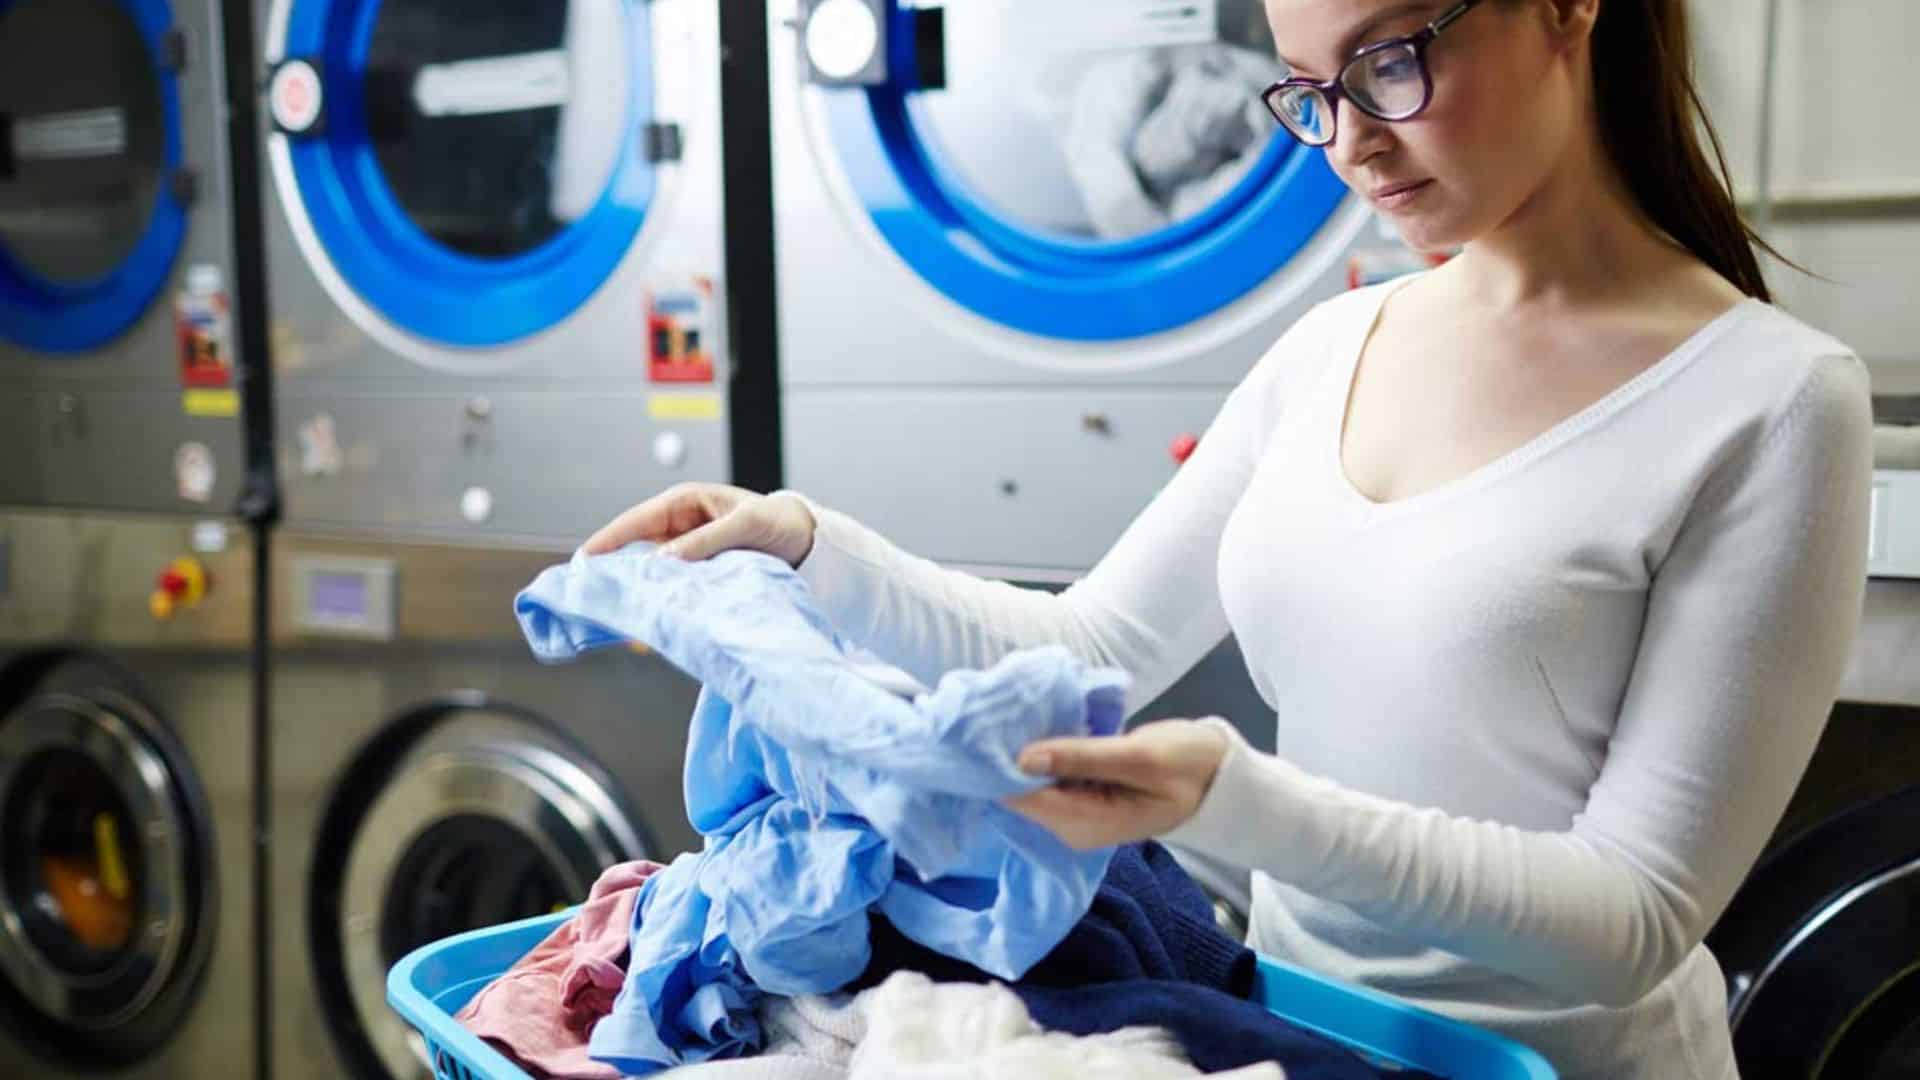 How Do Laundry Sеrvicеs in Jumеirah Savе Timе